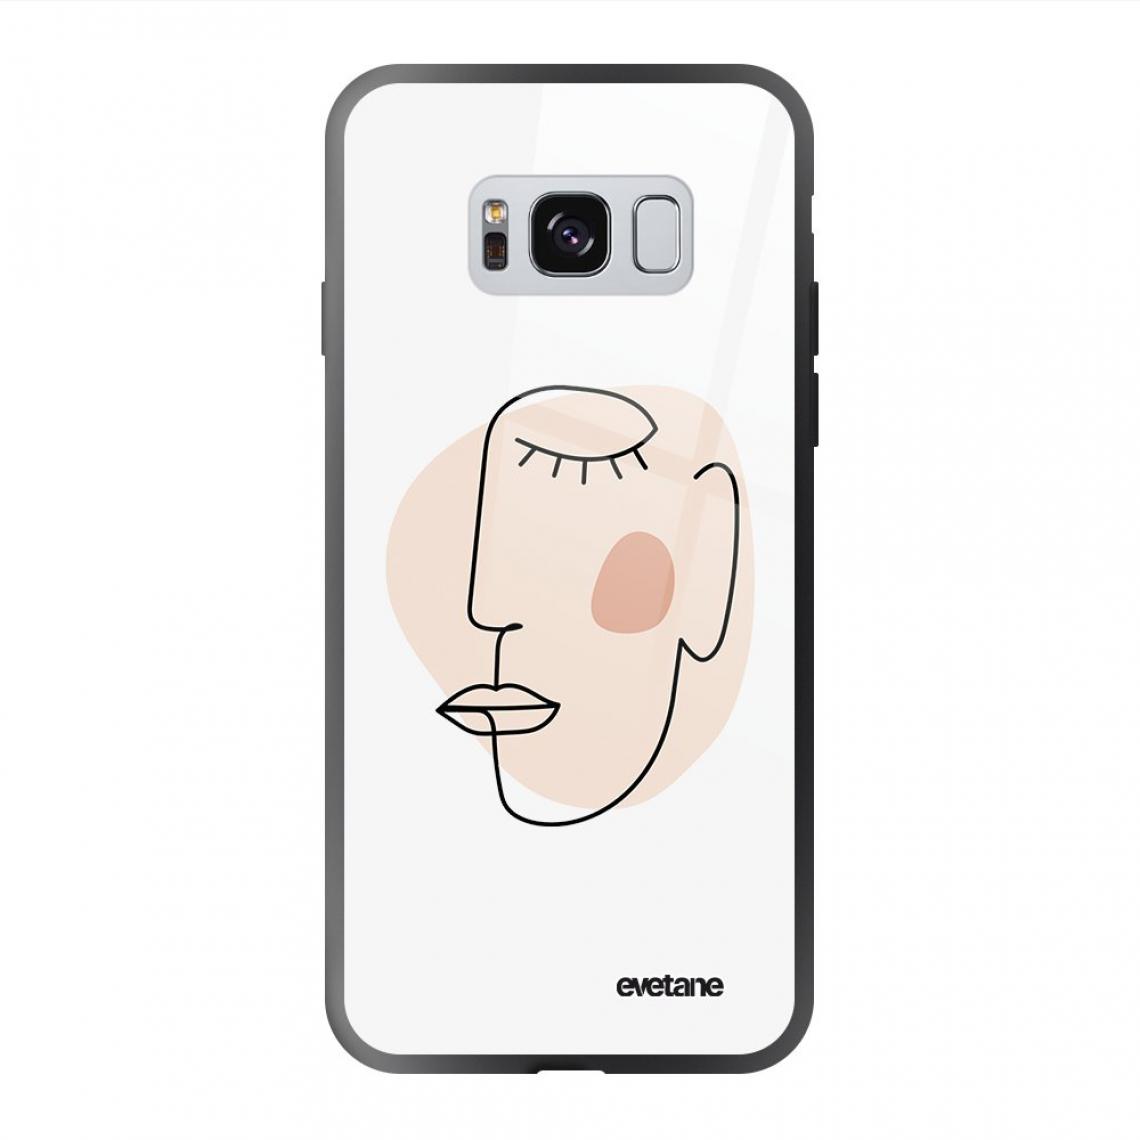 Evetane - Coque Galaxy S8 soft touch effet glossy - Coque, étui smartphone